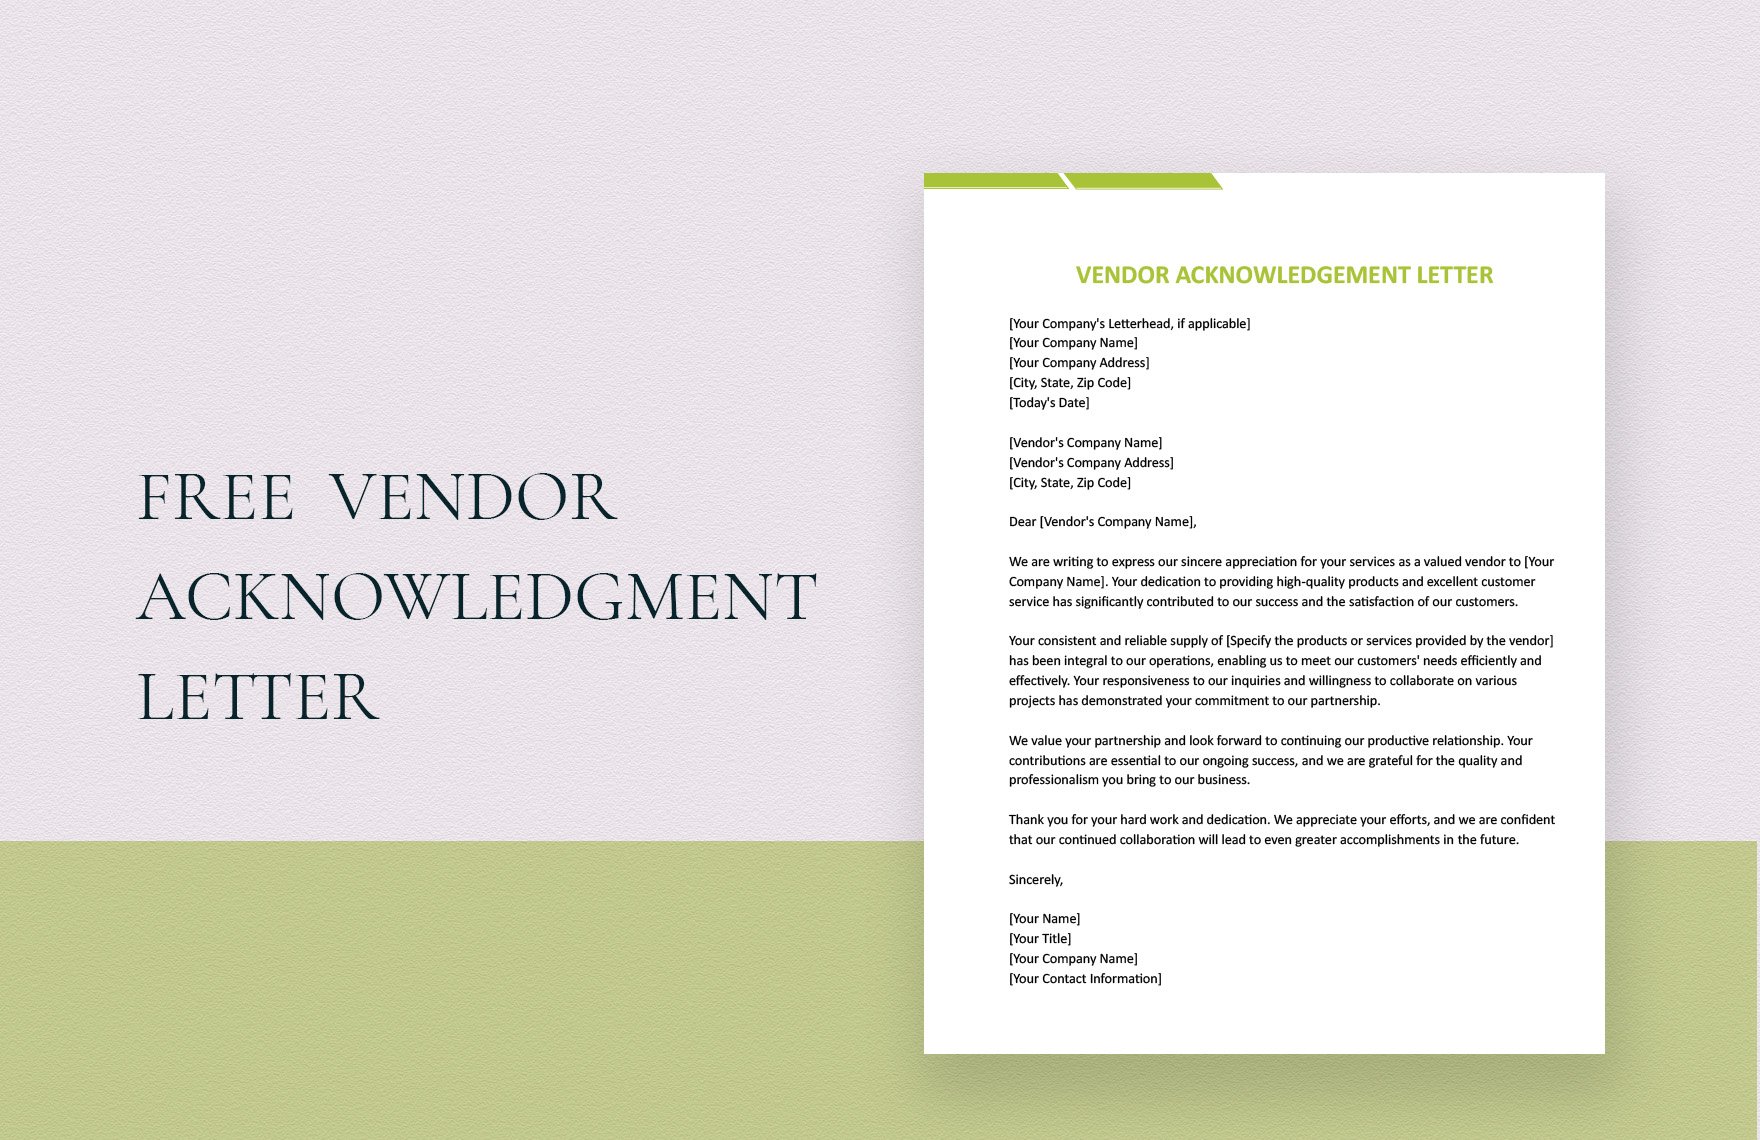 Vendor Acknowledgement Letter in Word, Google Docs